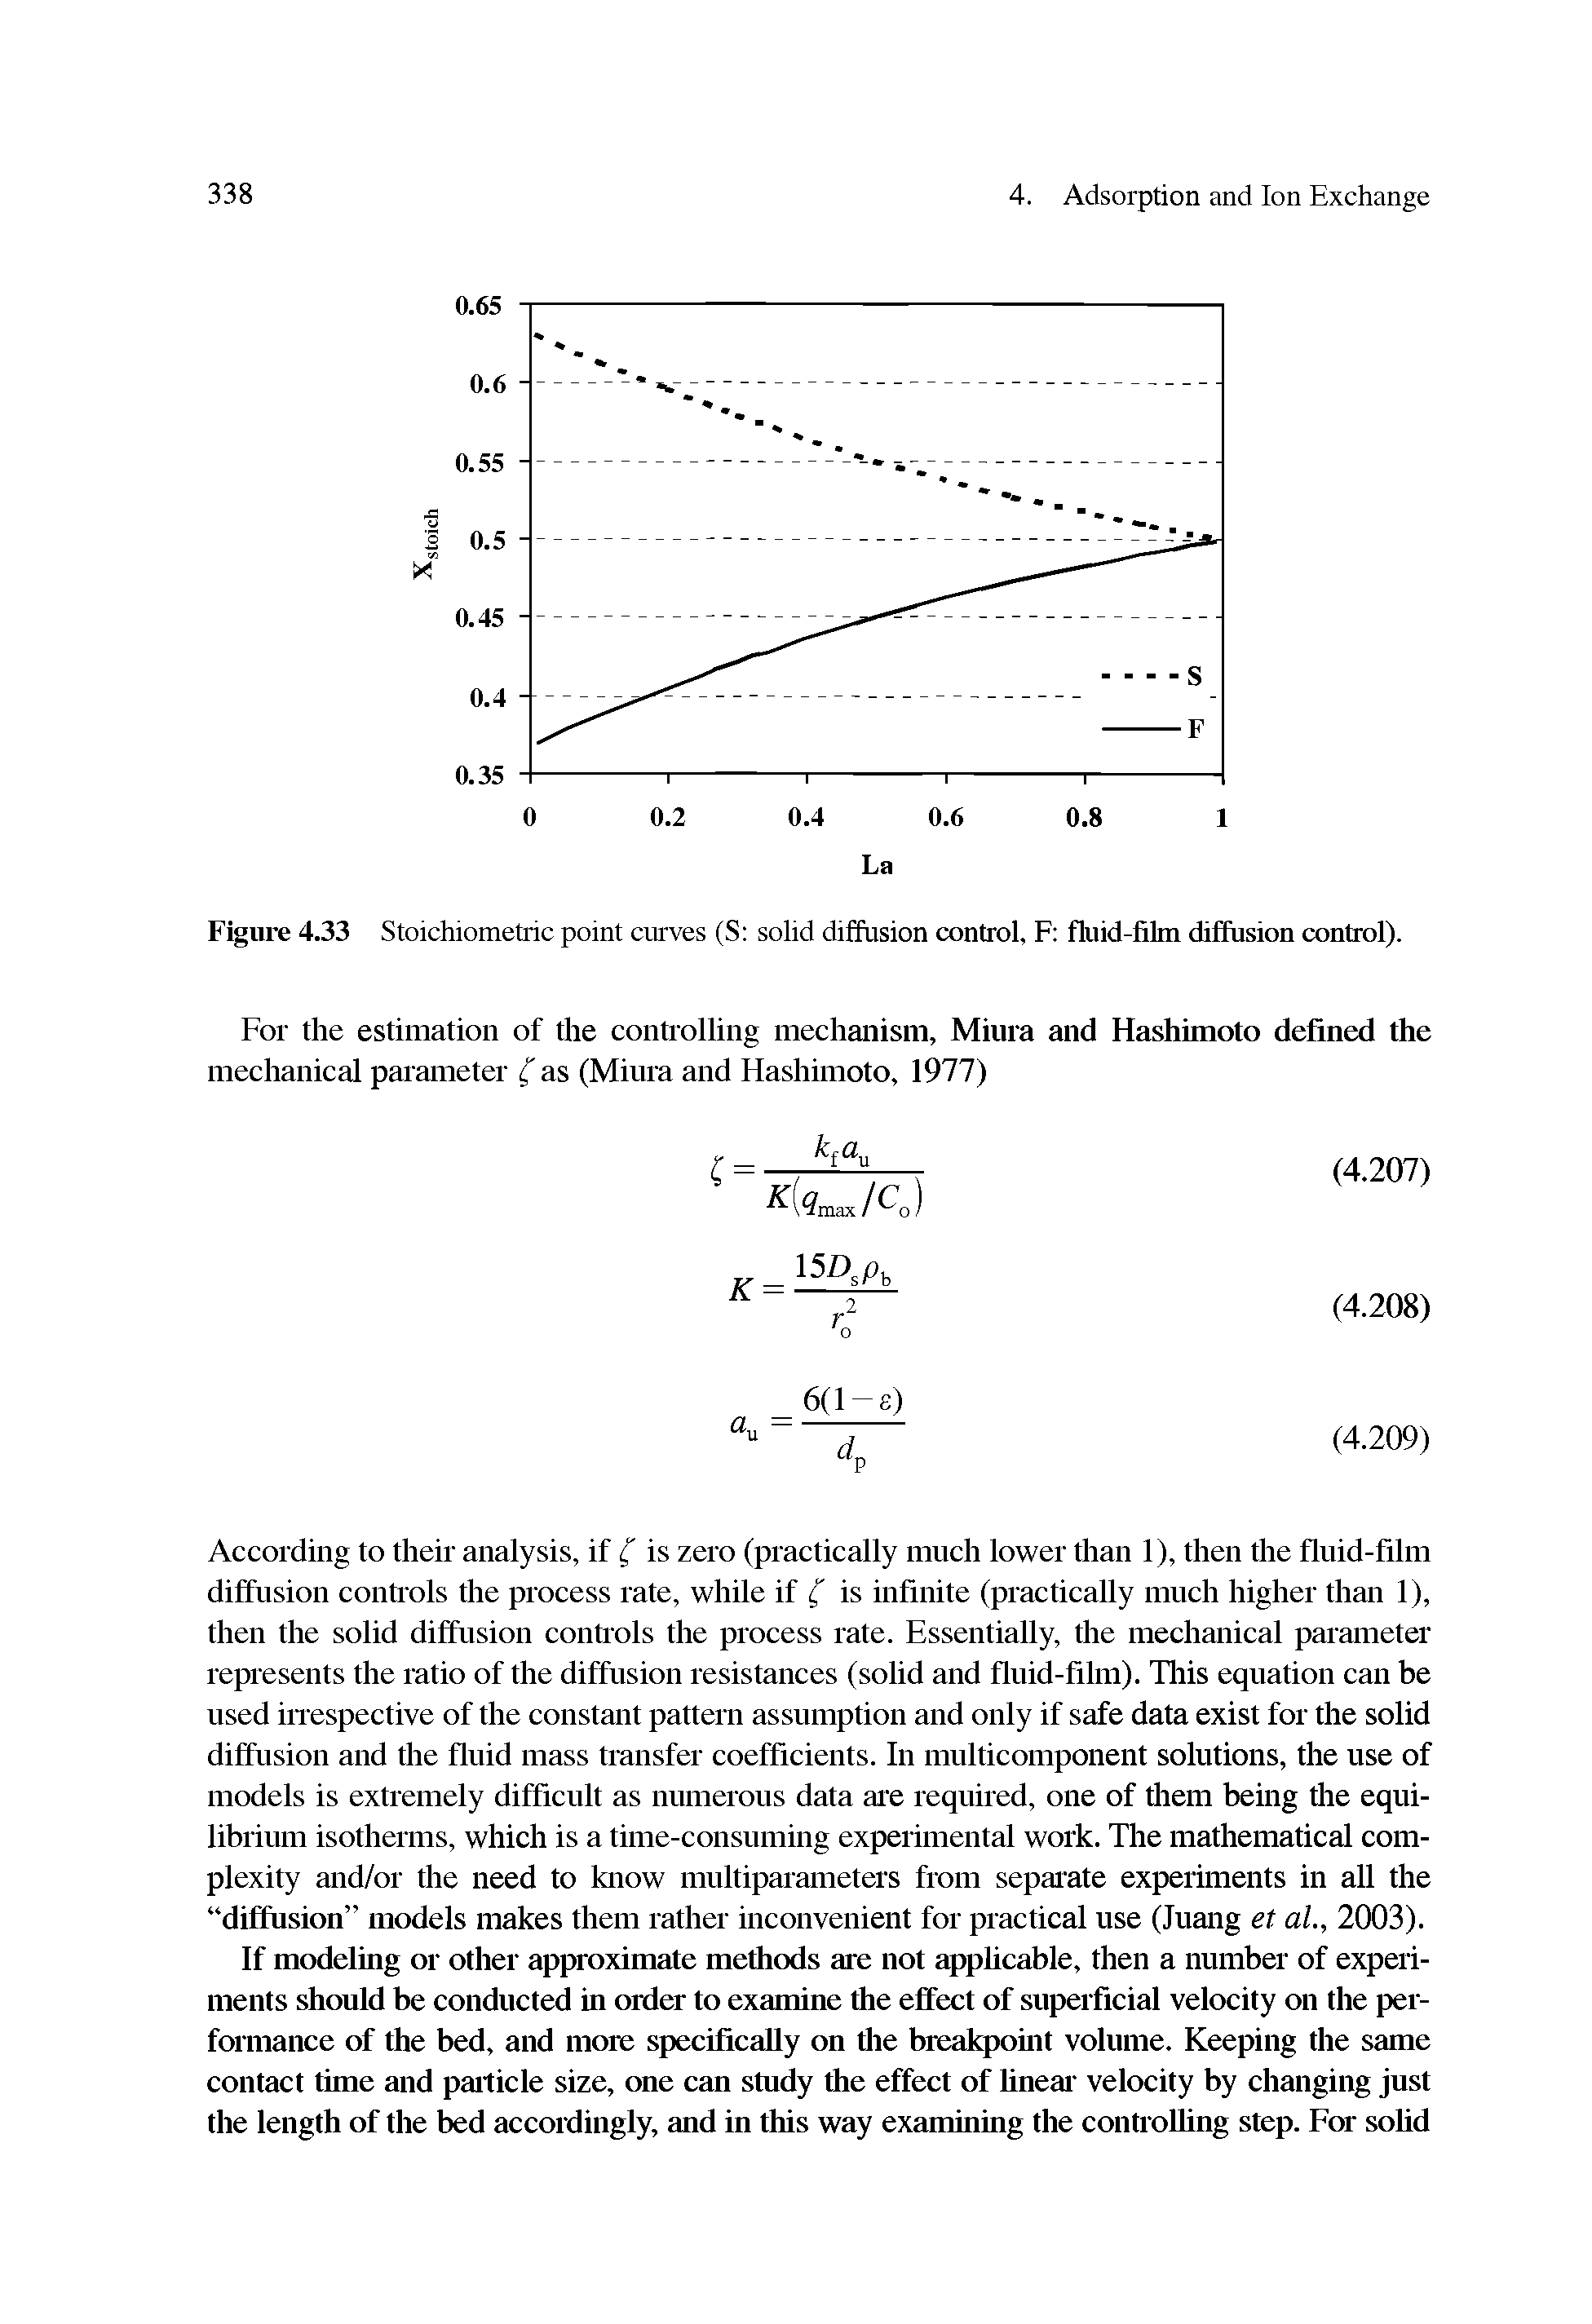 Figure 4.33 Stoichiometric point curves (S solid diffusion control, F fluid-film diffusion control).